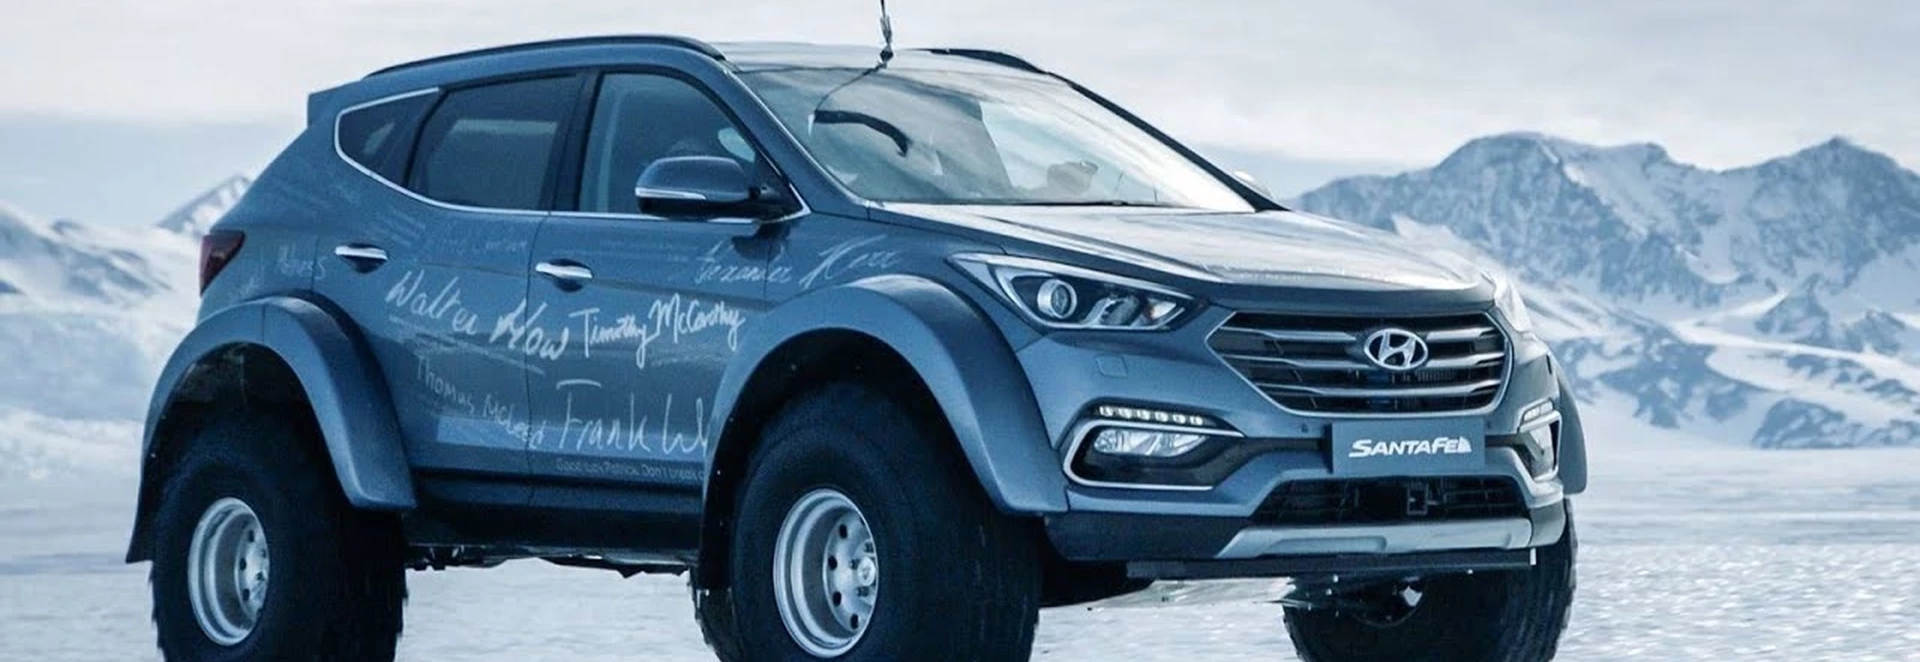 Monster Hyundai Santa Fe becomes first passenger car to conquer Antarctica